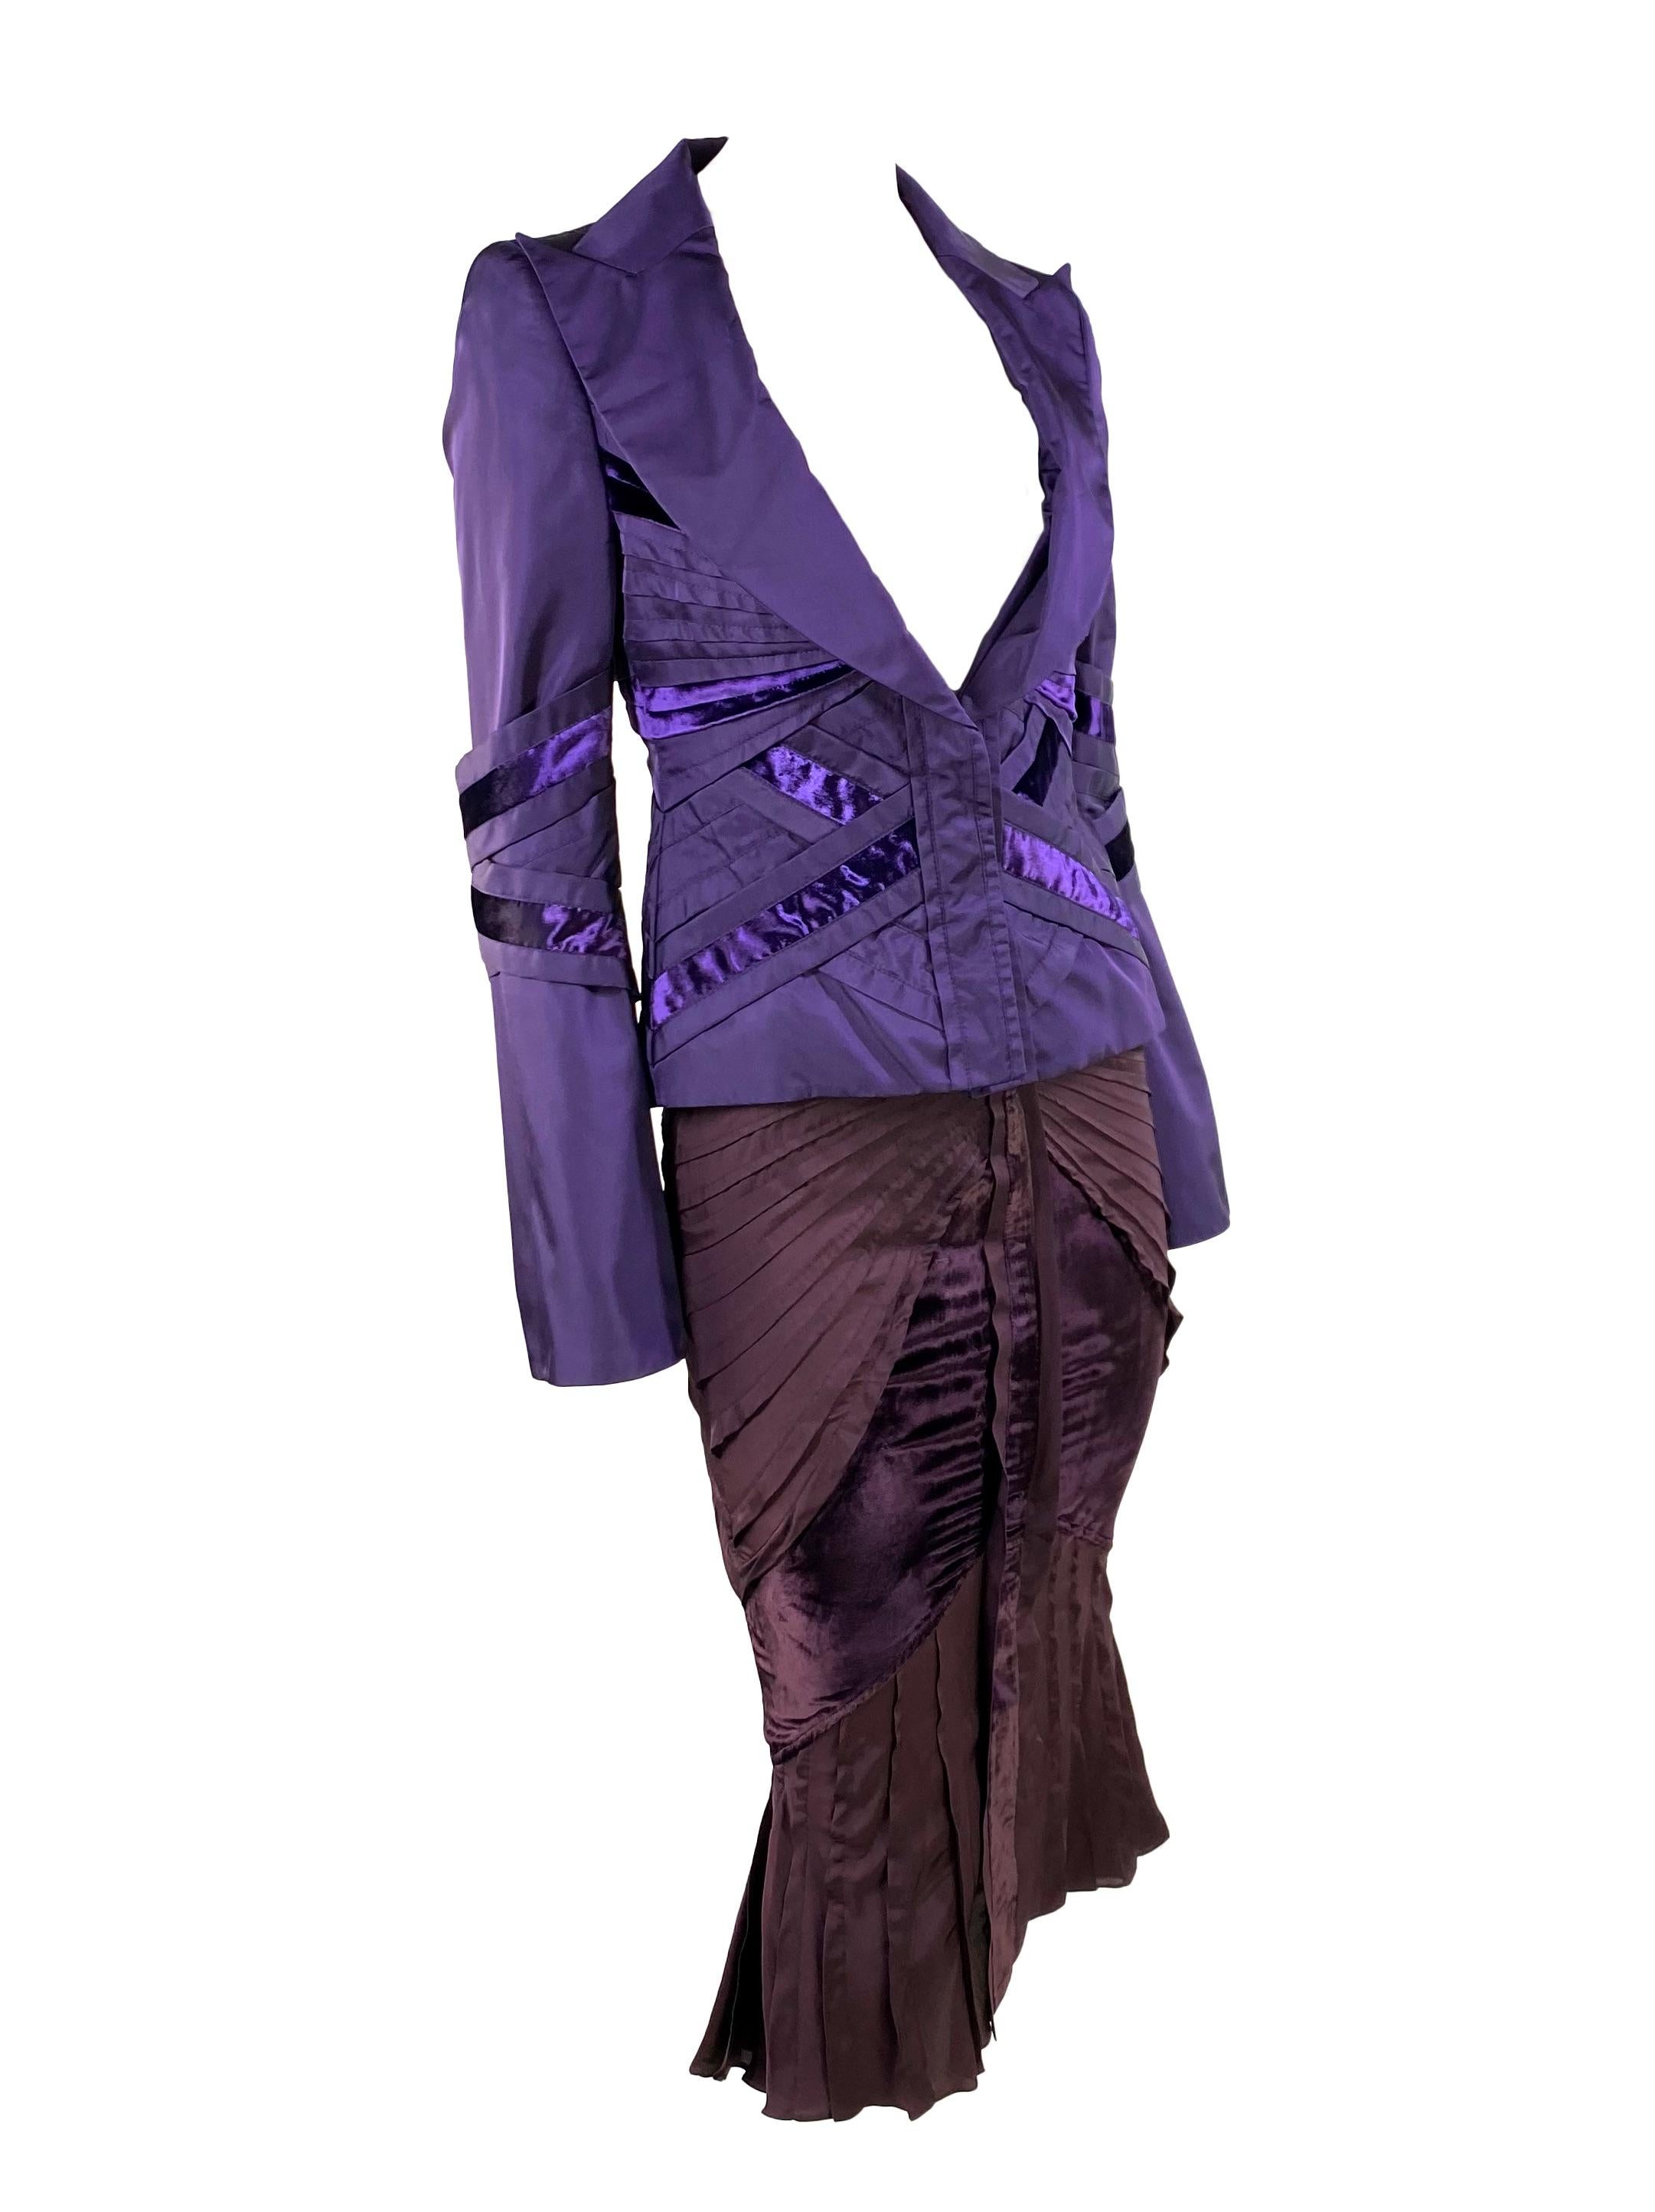 F/W 2004 Gucci by Tom Ford Lila Burgunderfarbener Samt-Laufstegrock mit Seidenband-Anzug (Violett) im Angebot